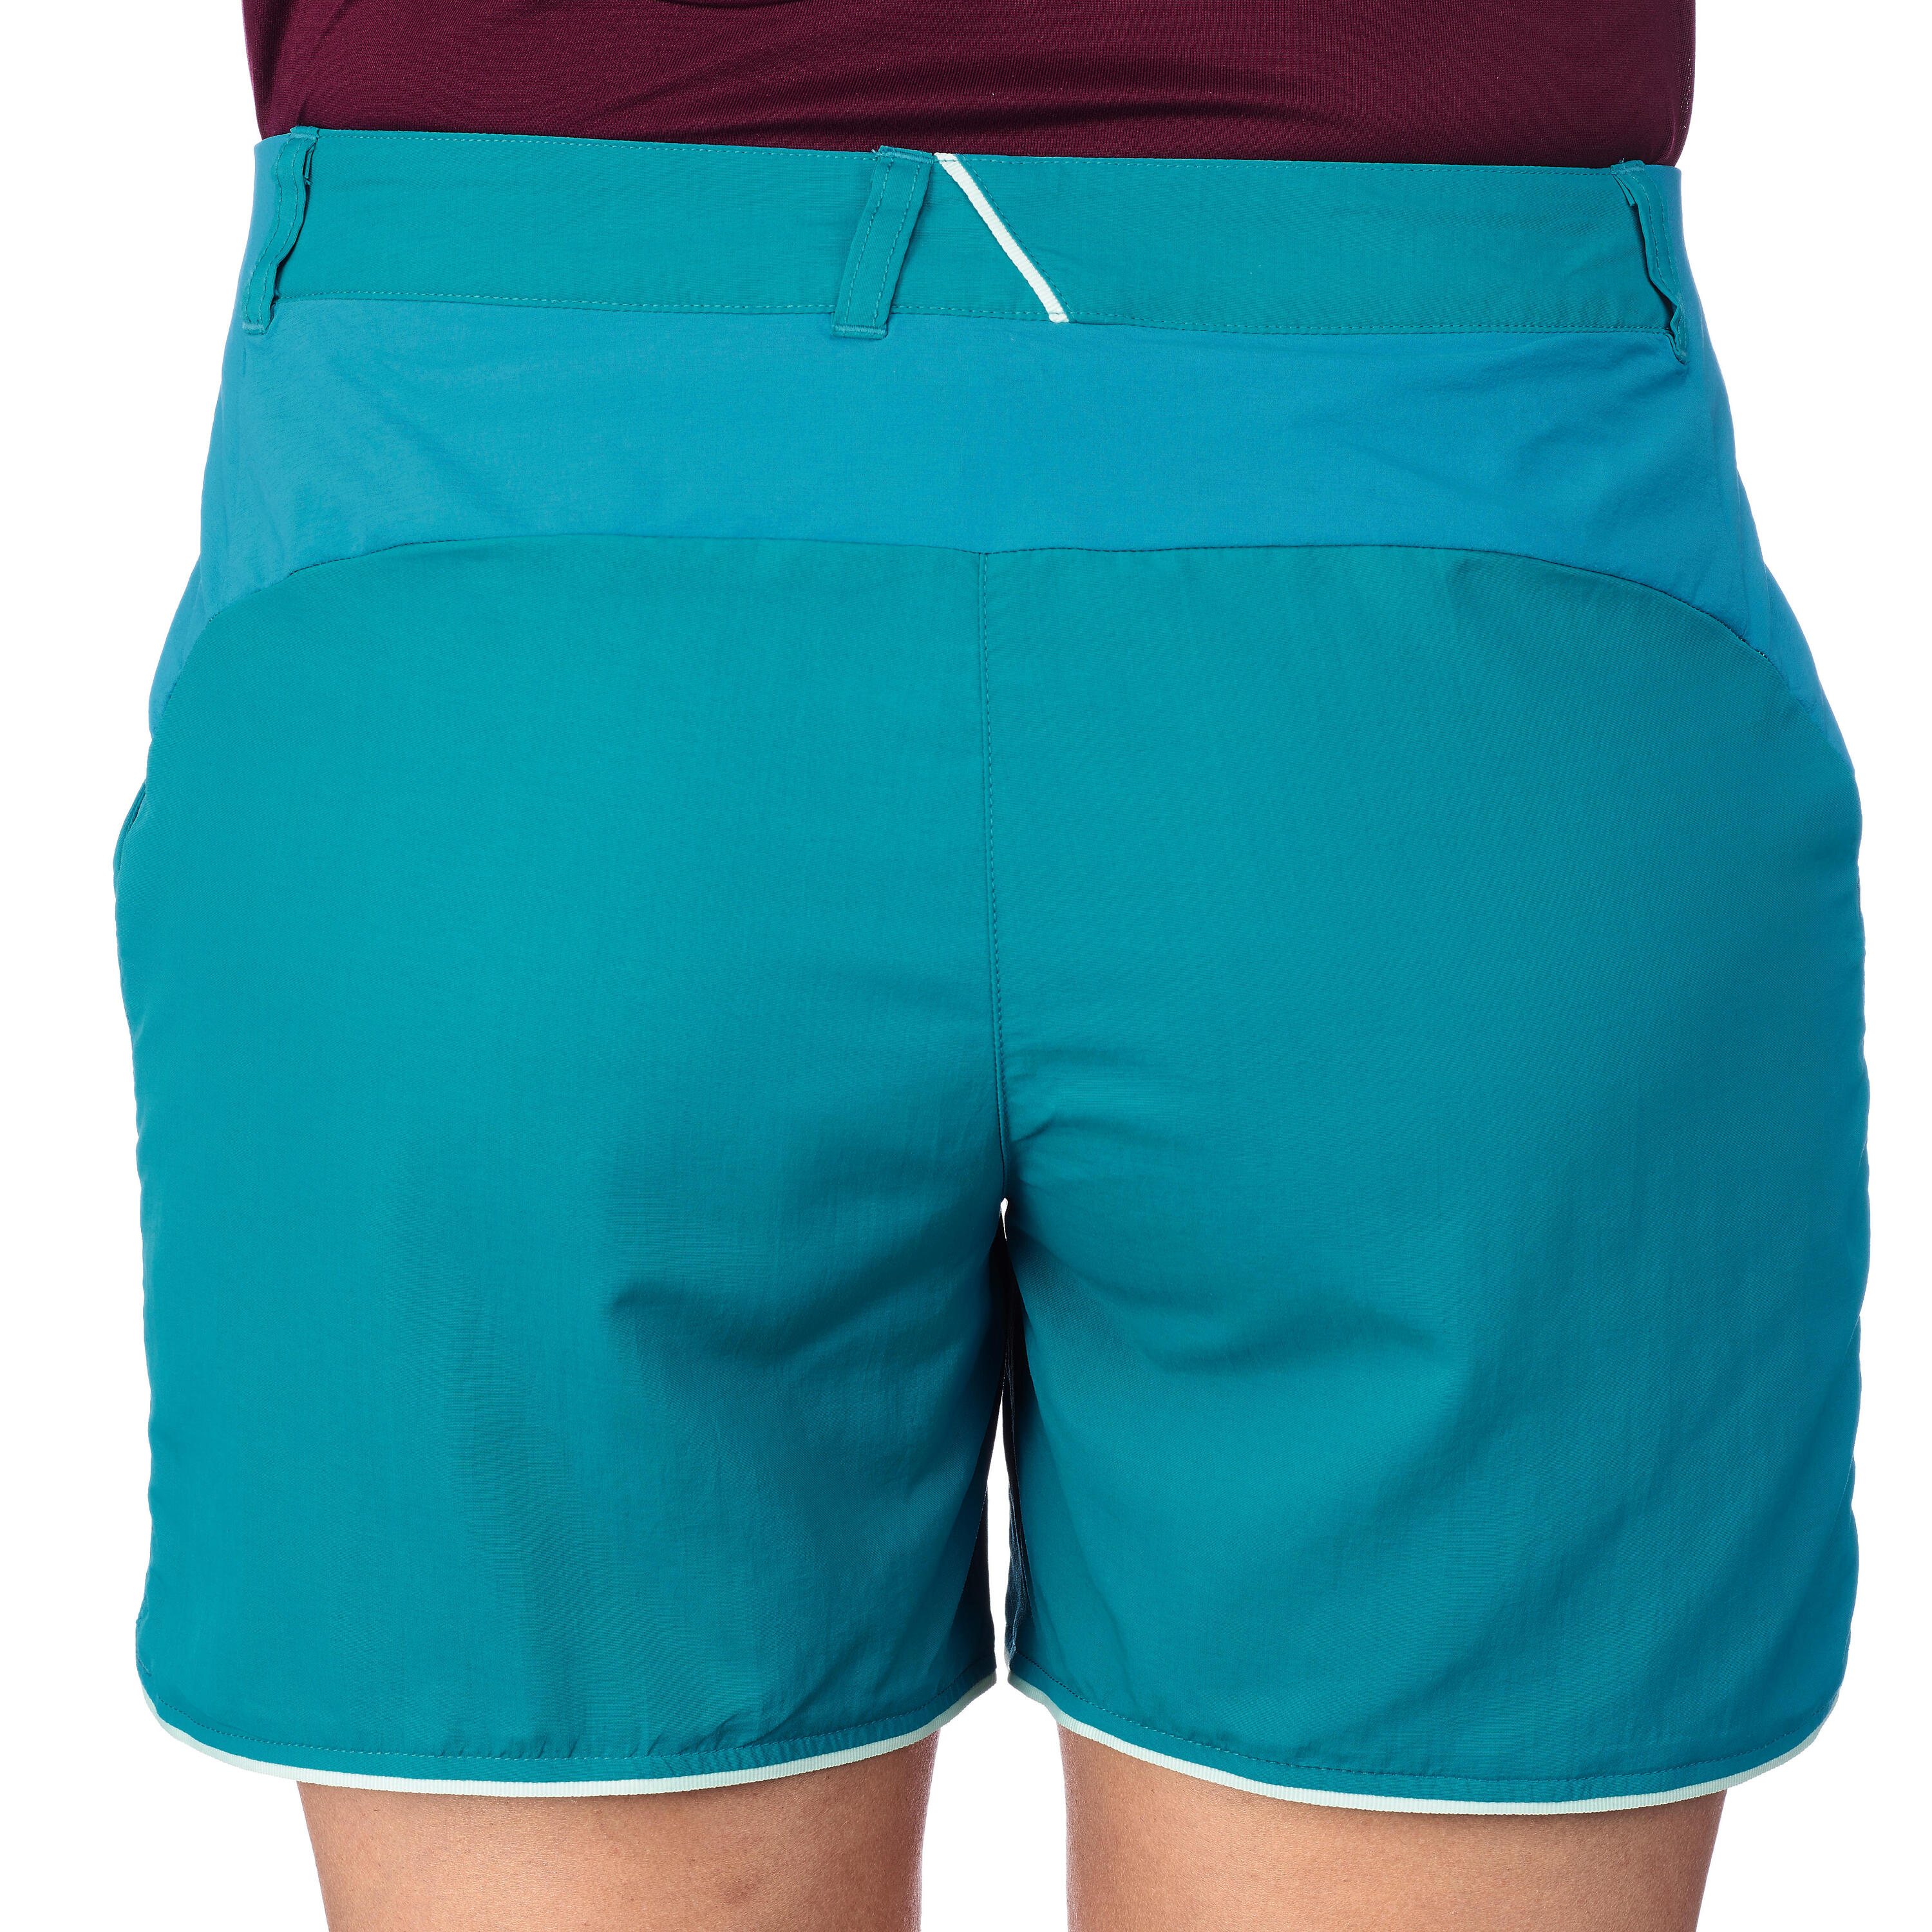 MH100 Women's Mountain Hiking Shorts - Turquoise Blue 4/7